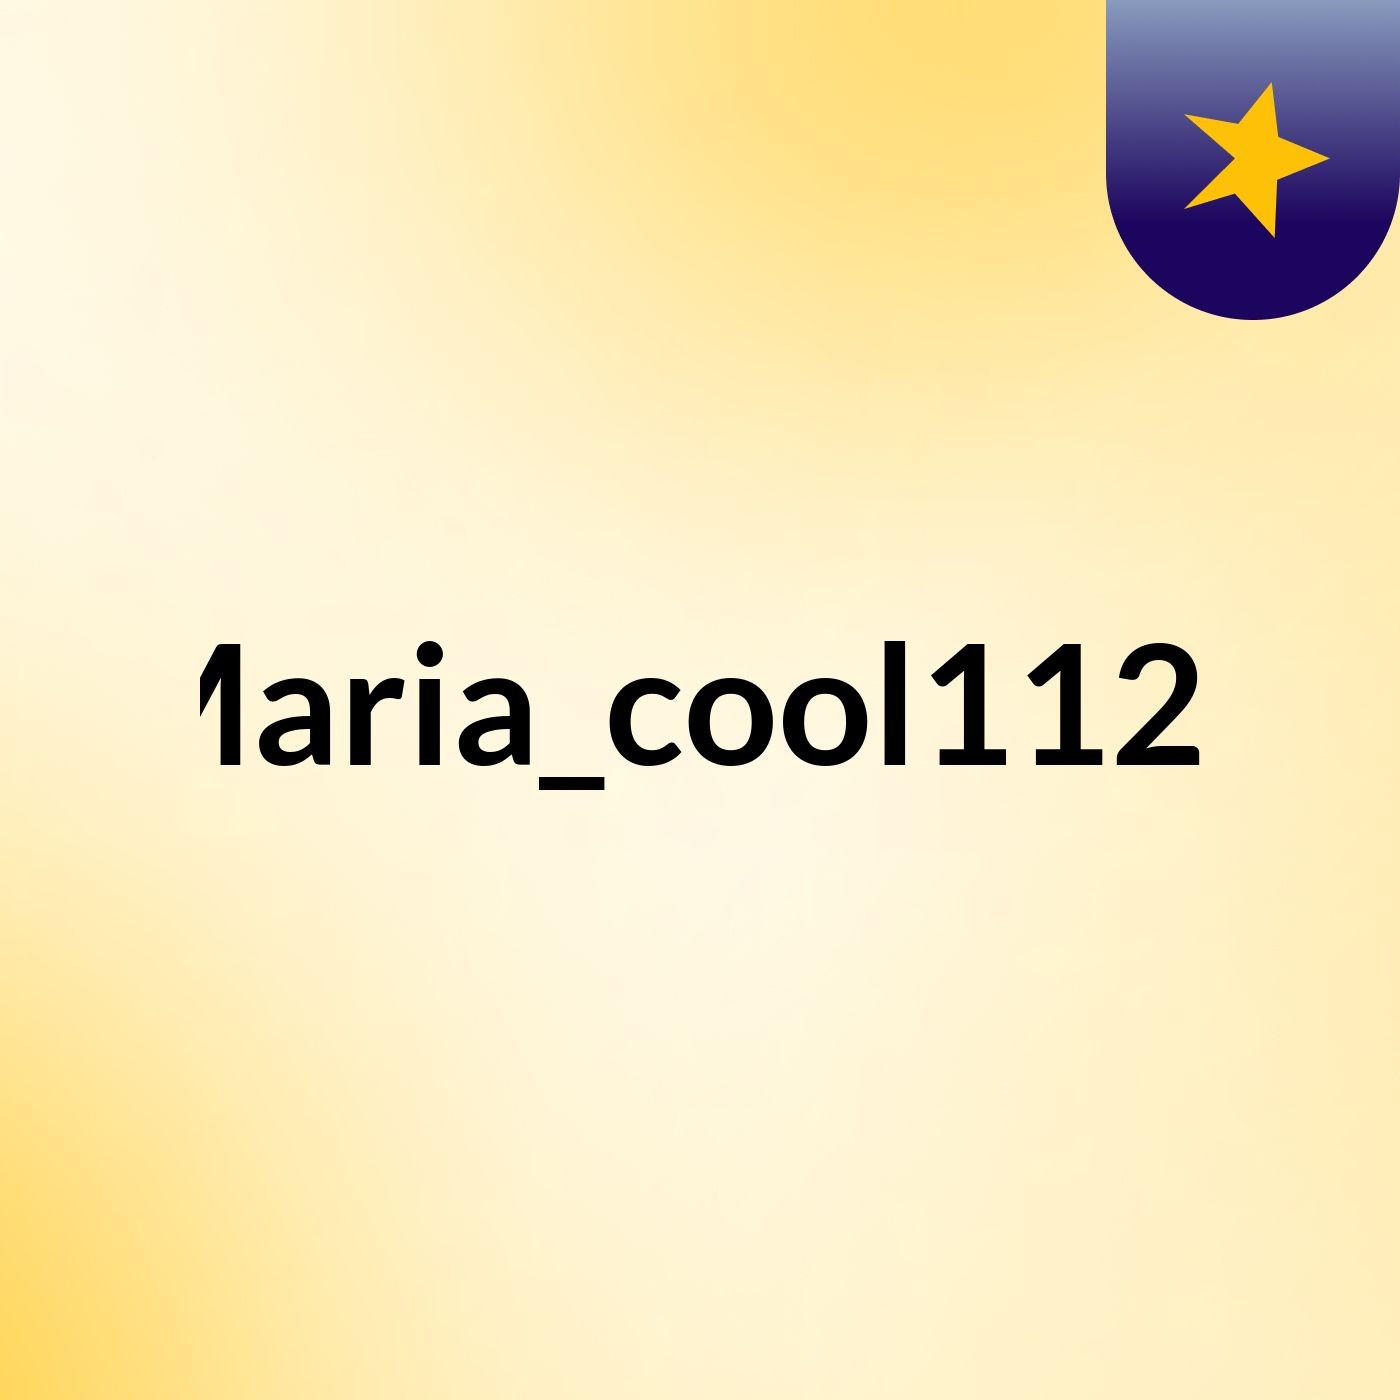 Maria_cool1123